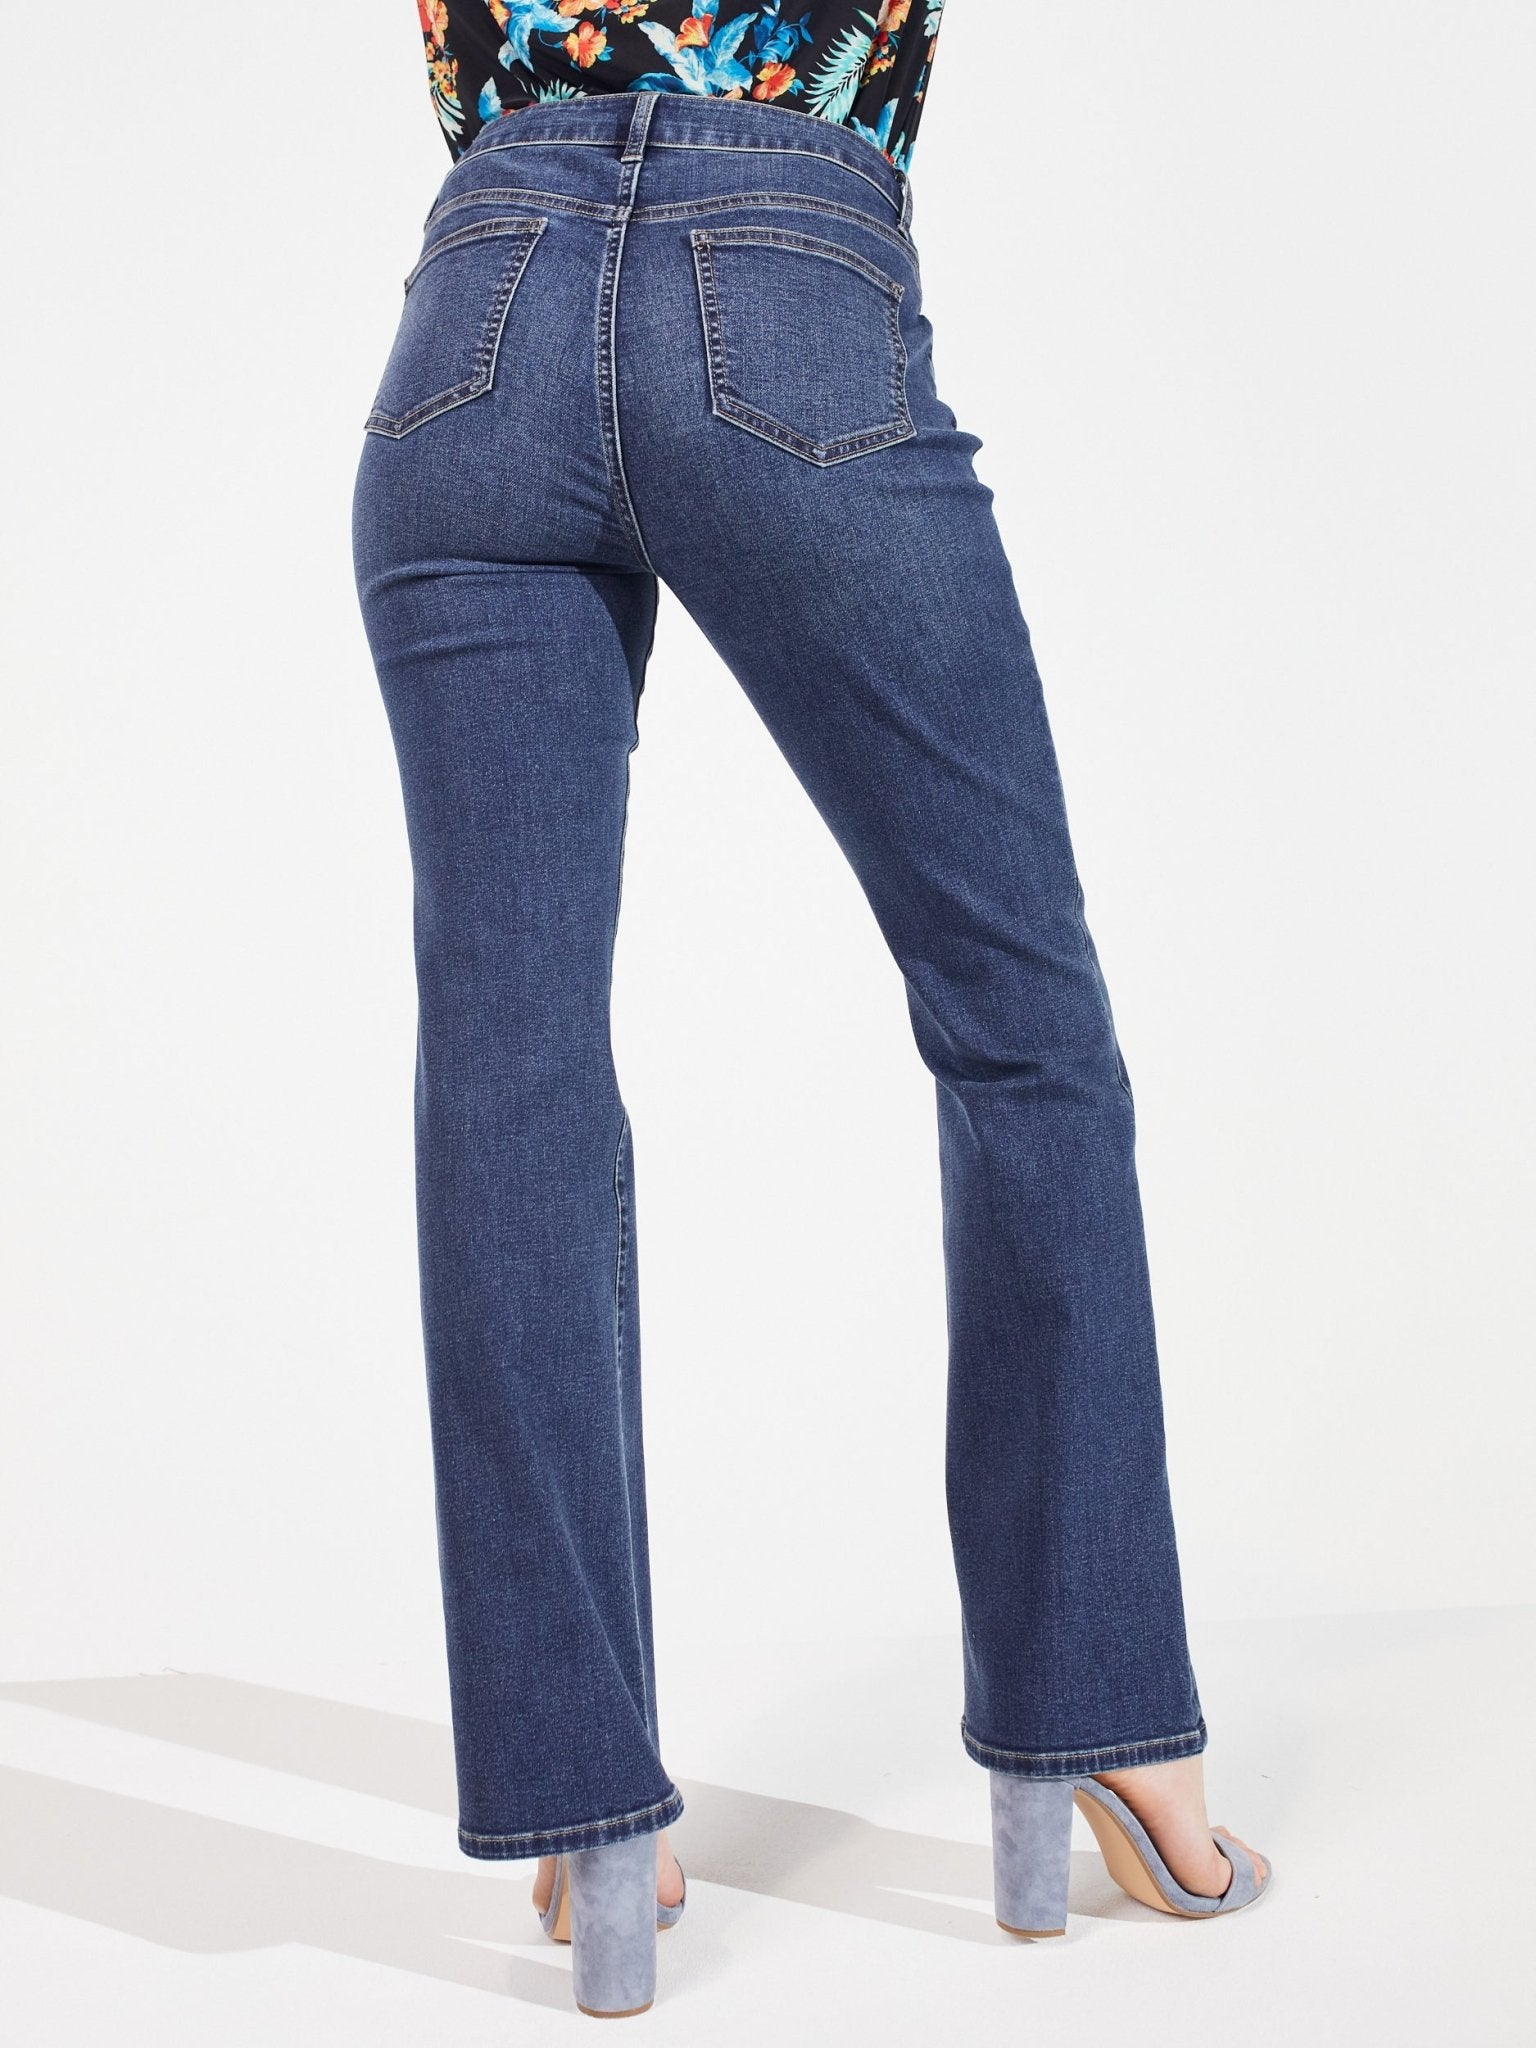 Westport Signature Mid-Rise Bootcut Jeans - Petite - DressbarnClothing